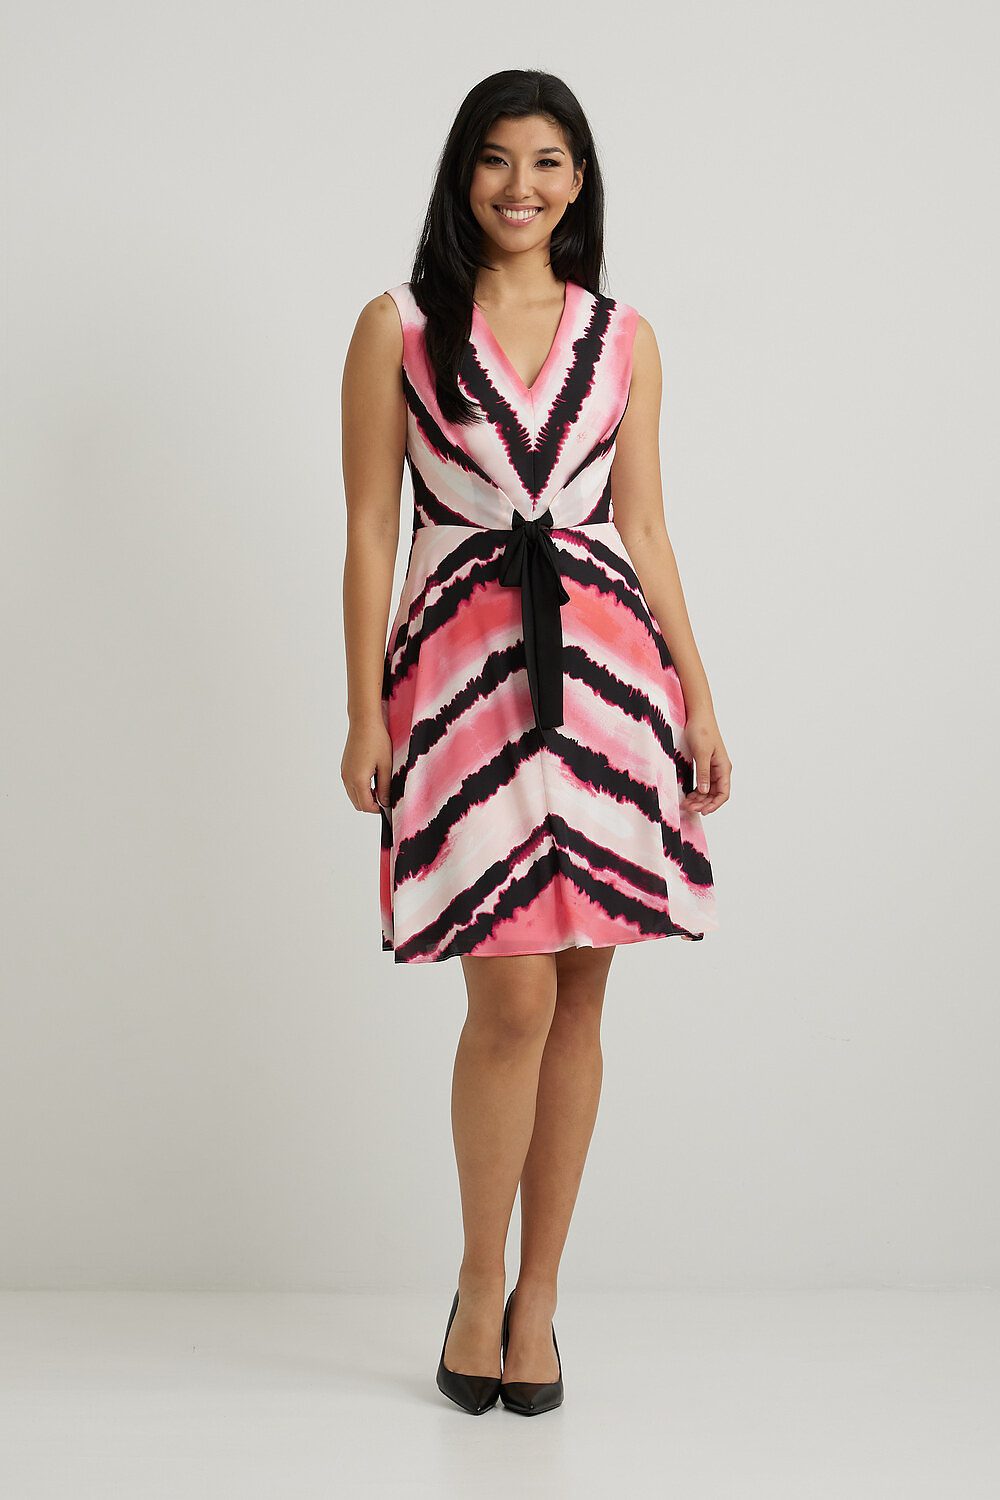 Joseph Ribkoff Abstract Print Dress Style 222104. Pink/black